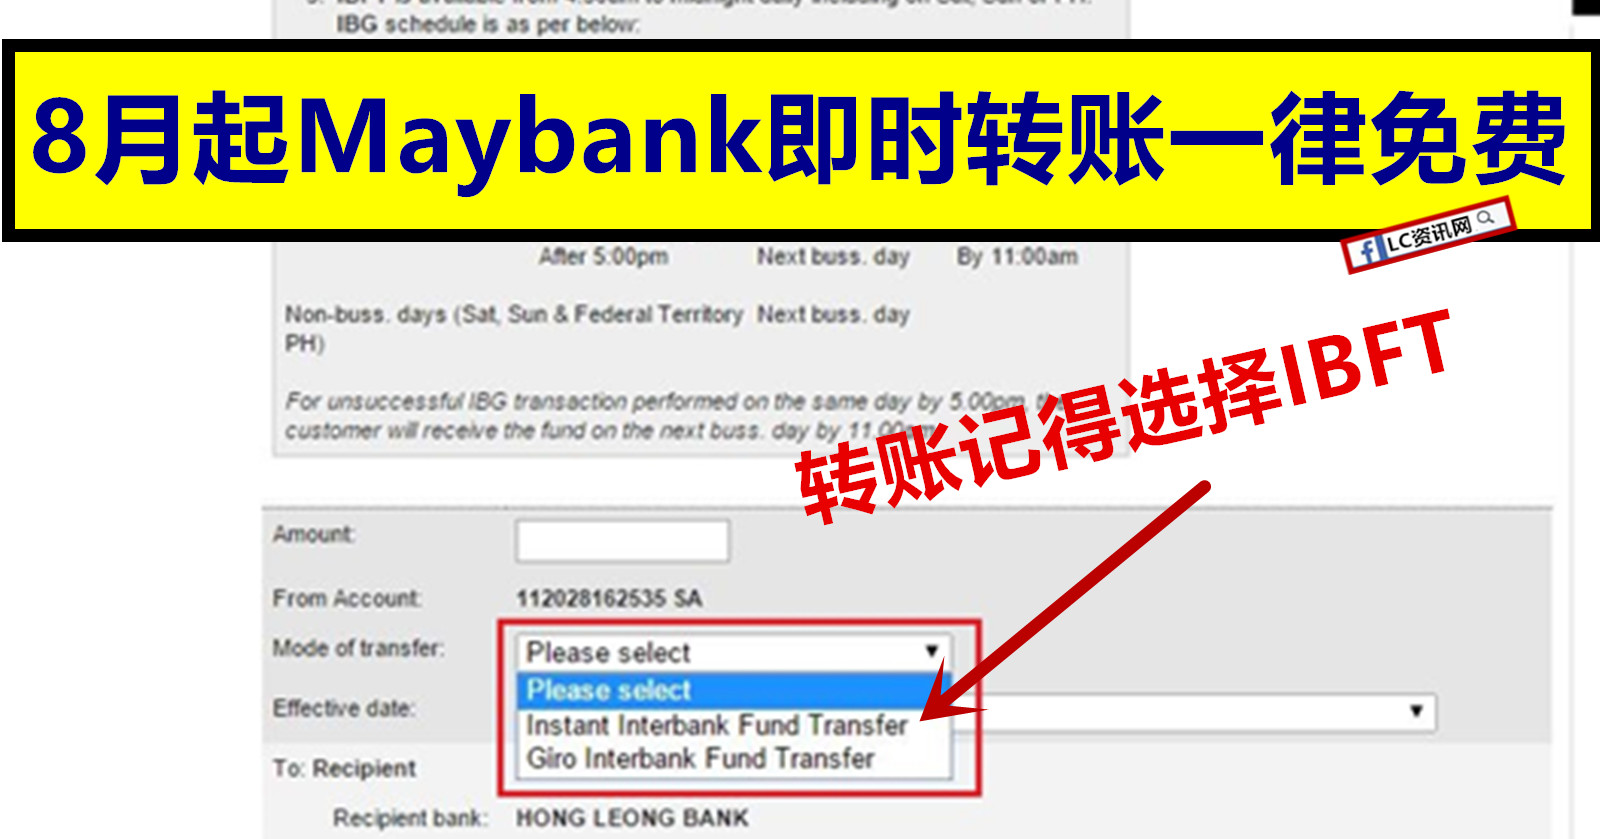 Maybank giro transfer eServices Fees